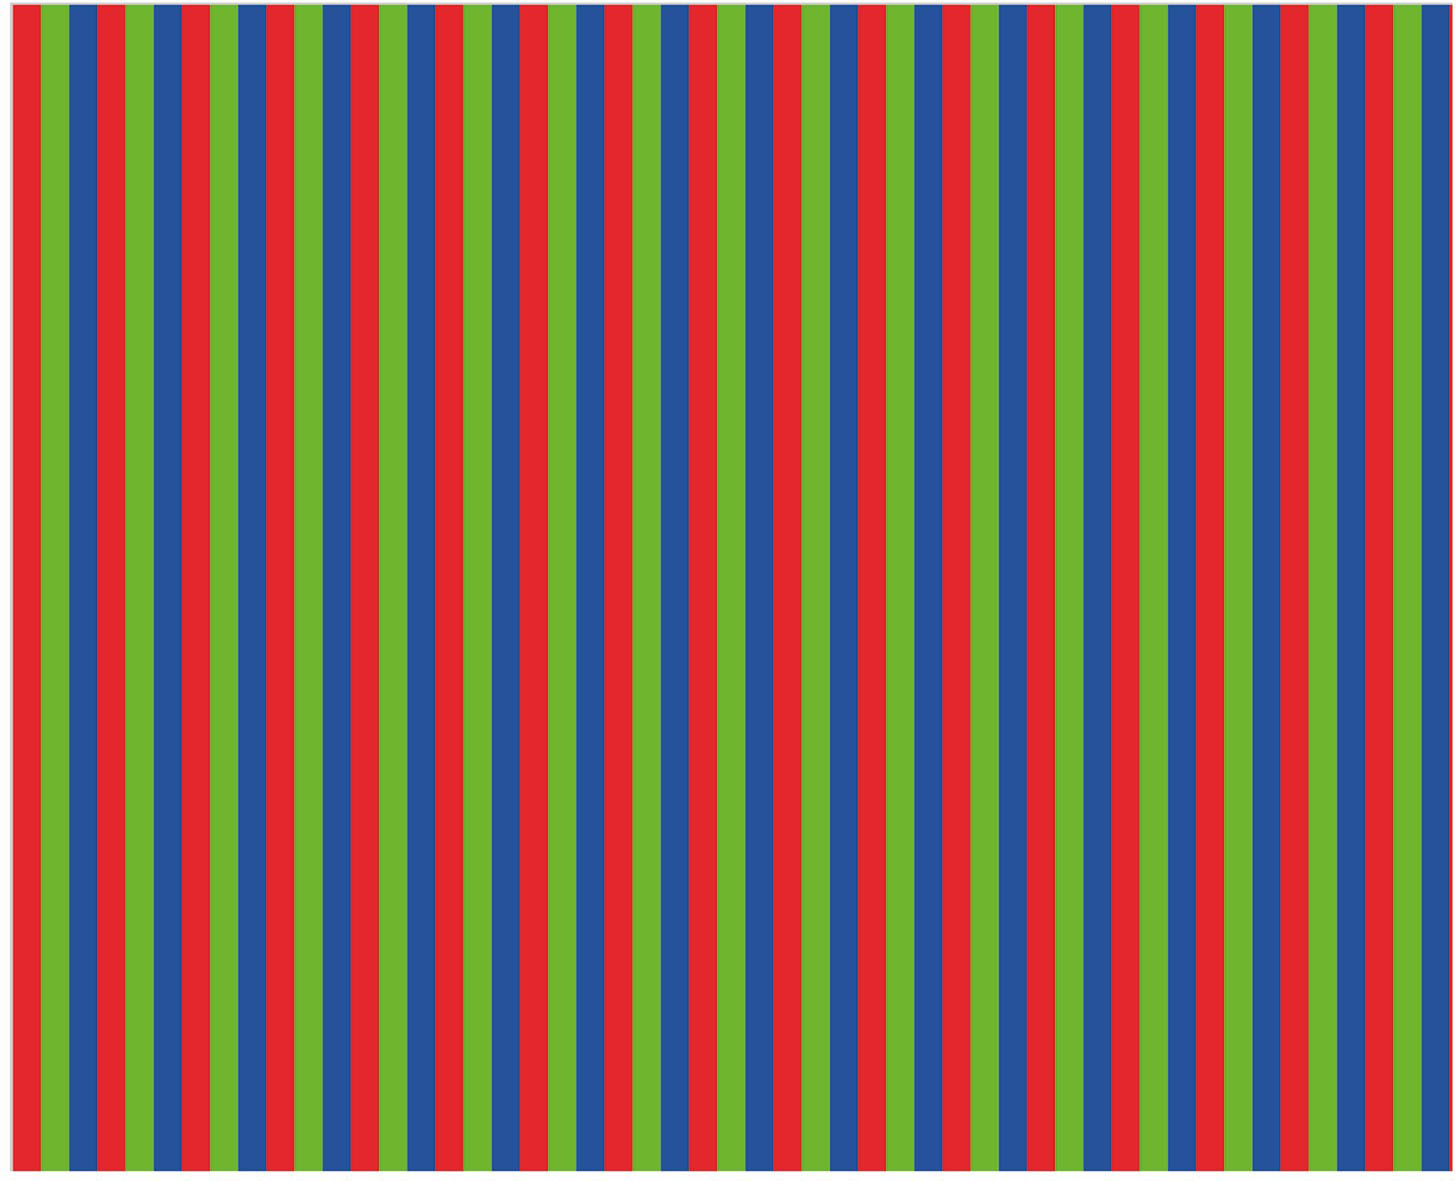 RGB color sinusoidal fringe pattern